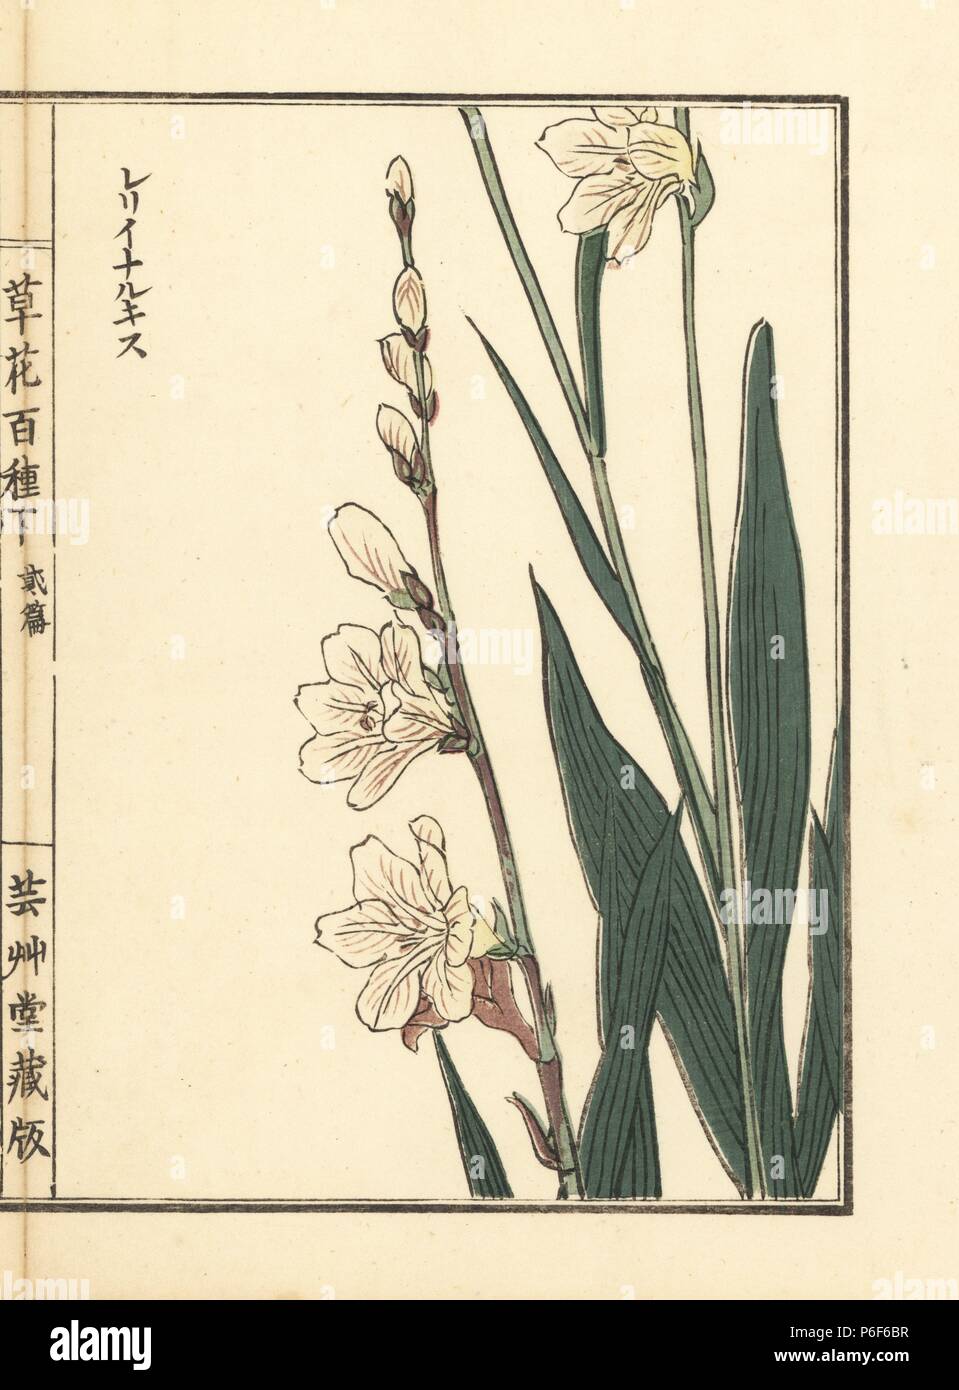 Rerii narukisu or daffodil variety, Narcissus species. Handcoloured woodblock print by Kono Bairei from Kusa Bana Hyakushu (One Hundred Varieties of Flowers), Tokyo, Yamada, 1901. Stock Photo